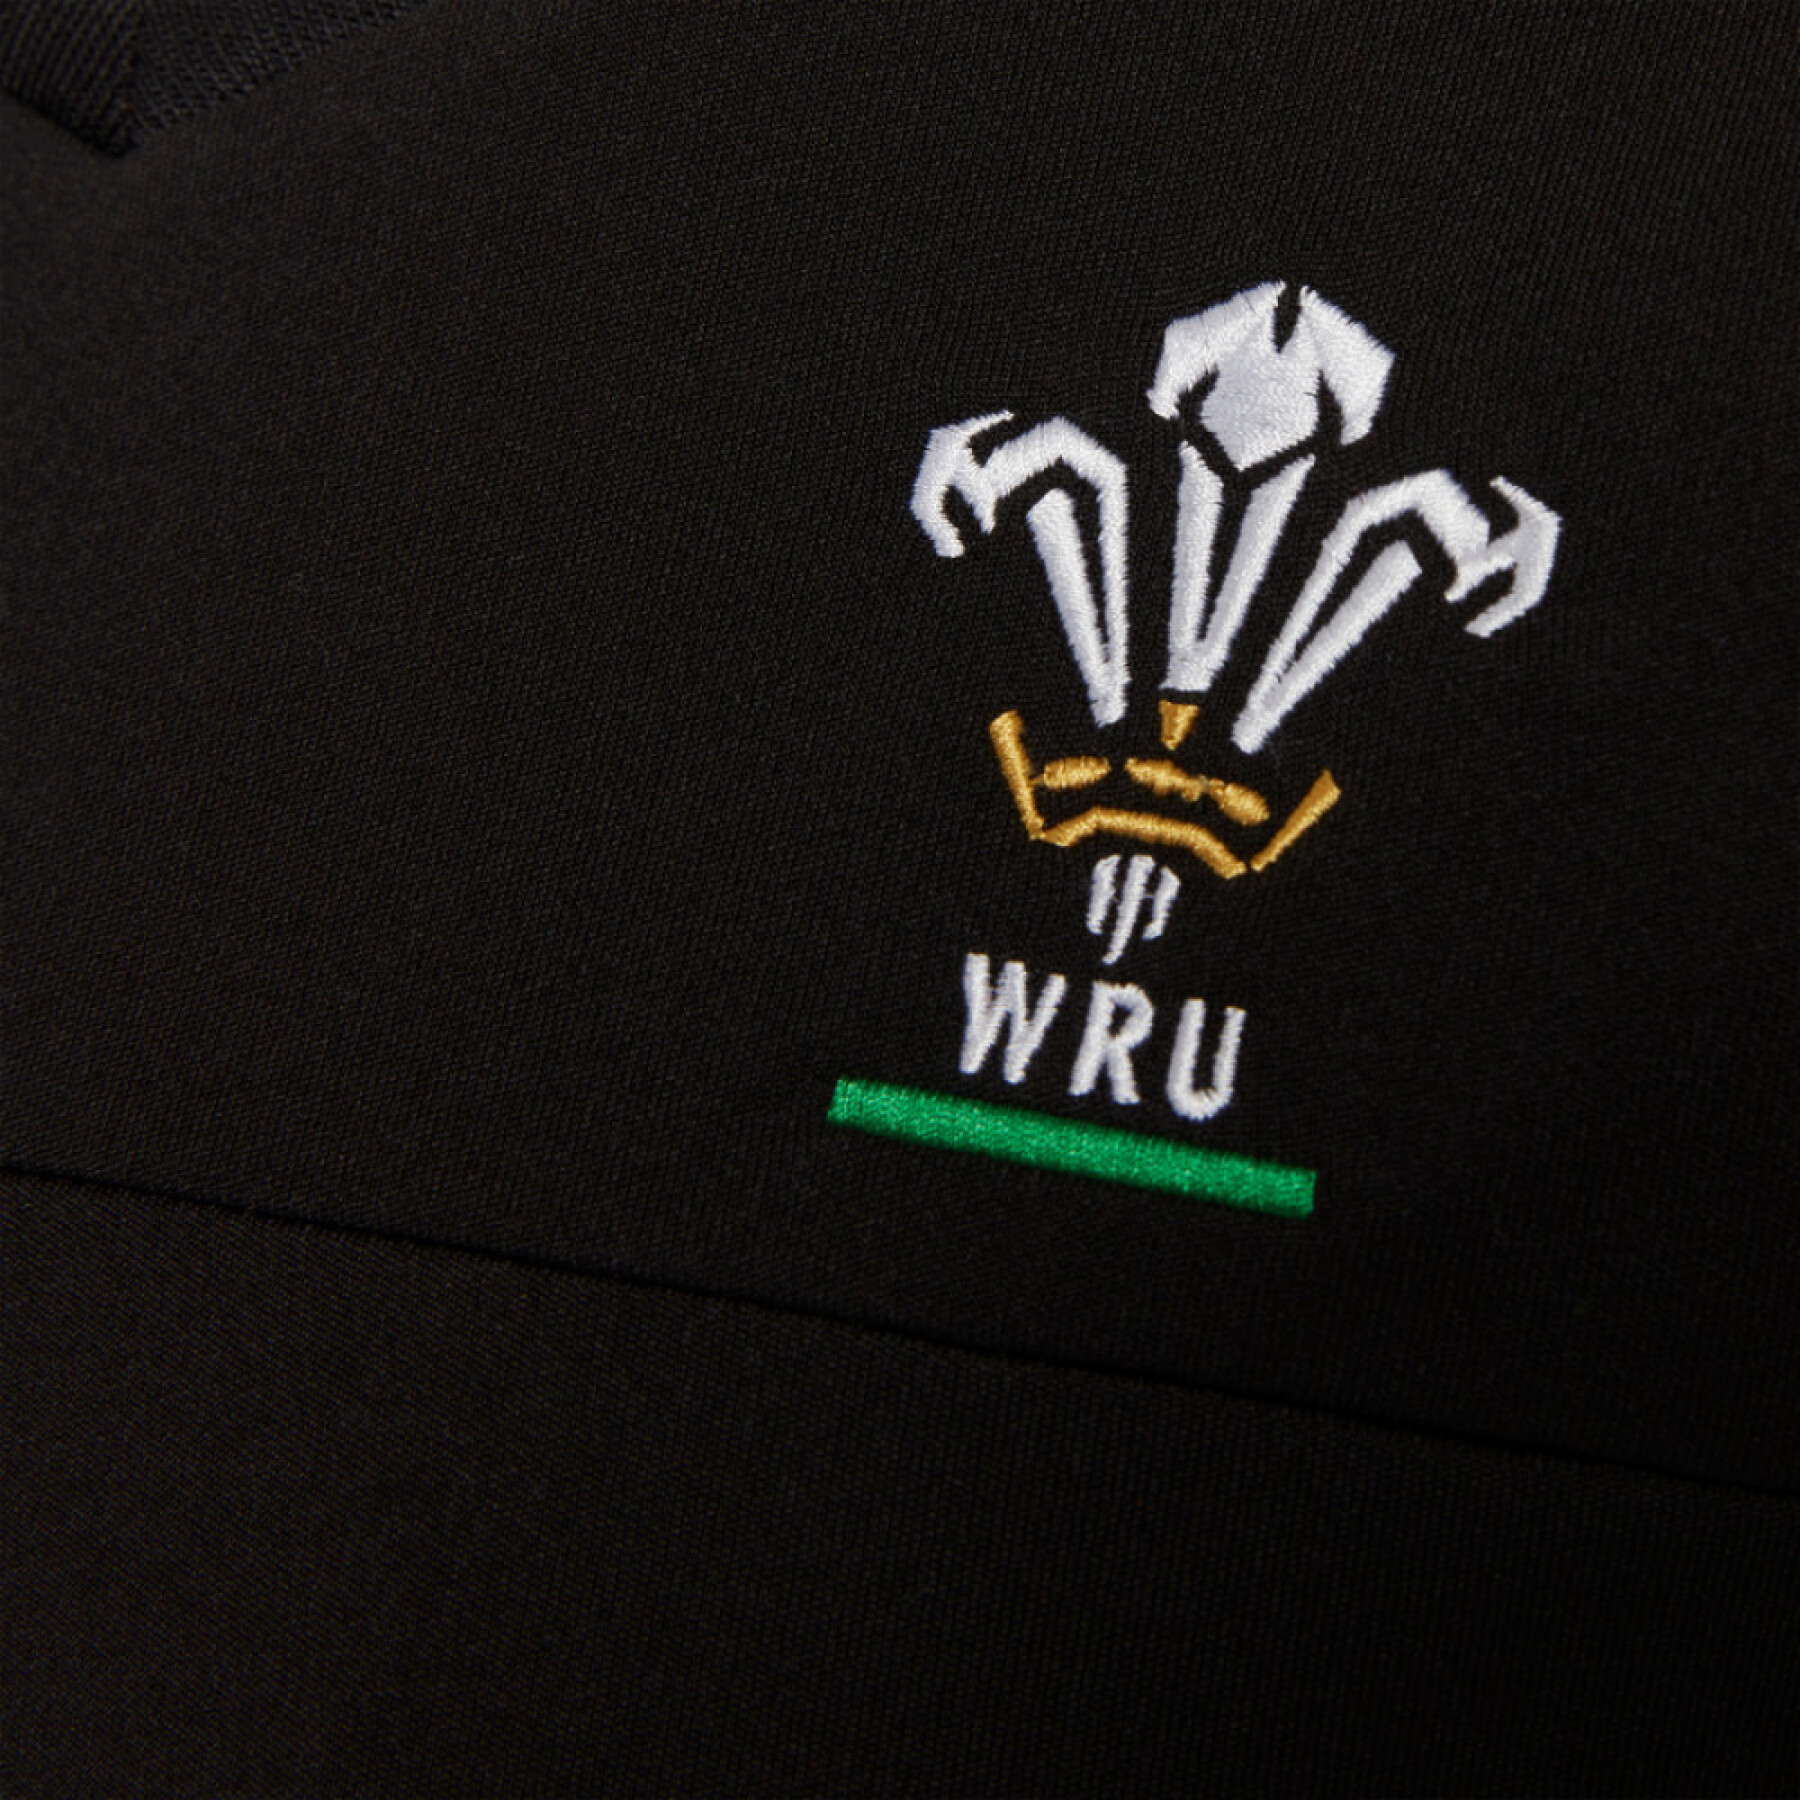 Trikot des Kinderpersonals Pays de Galles Rugby XV 2020/21